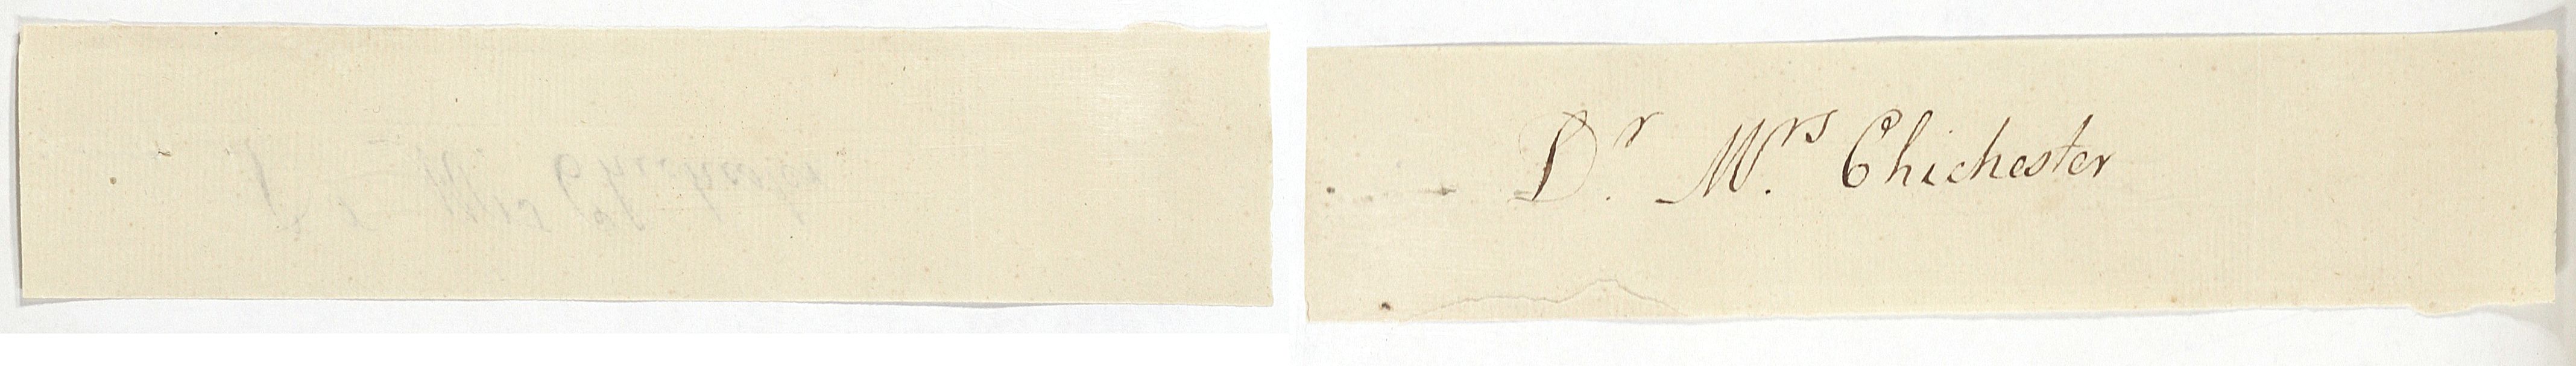 Image of Folio 67 inserts (transcription below)